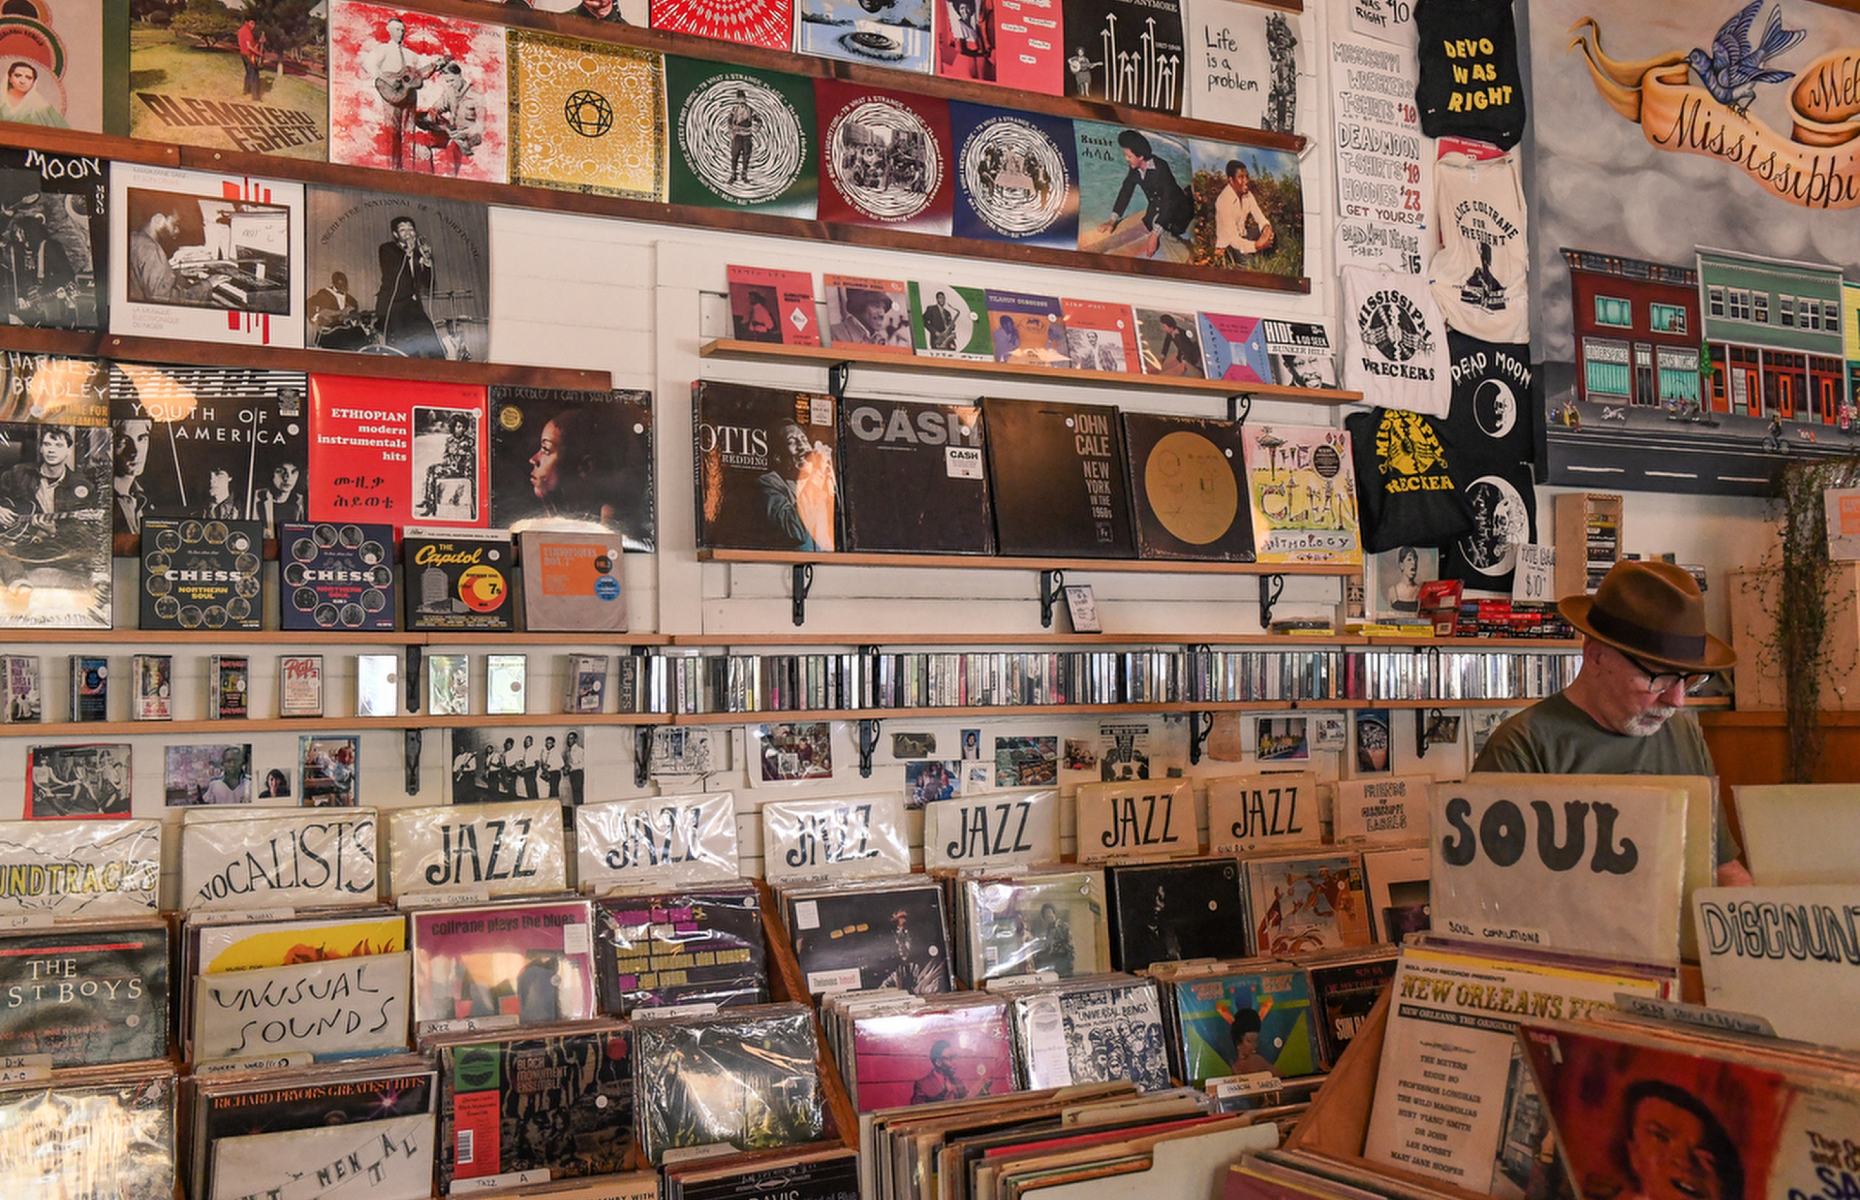 Mississippi Records in Portland (Image: Courtesy of Travel Portland)